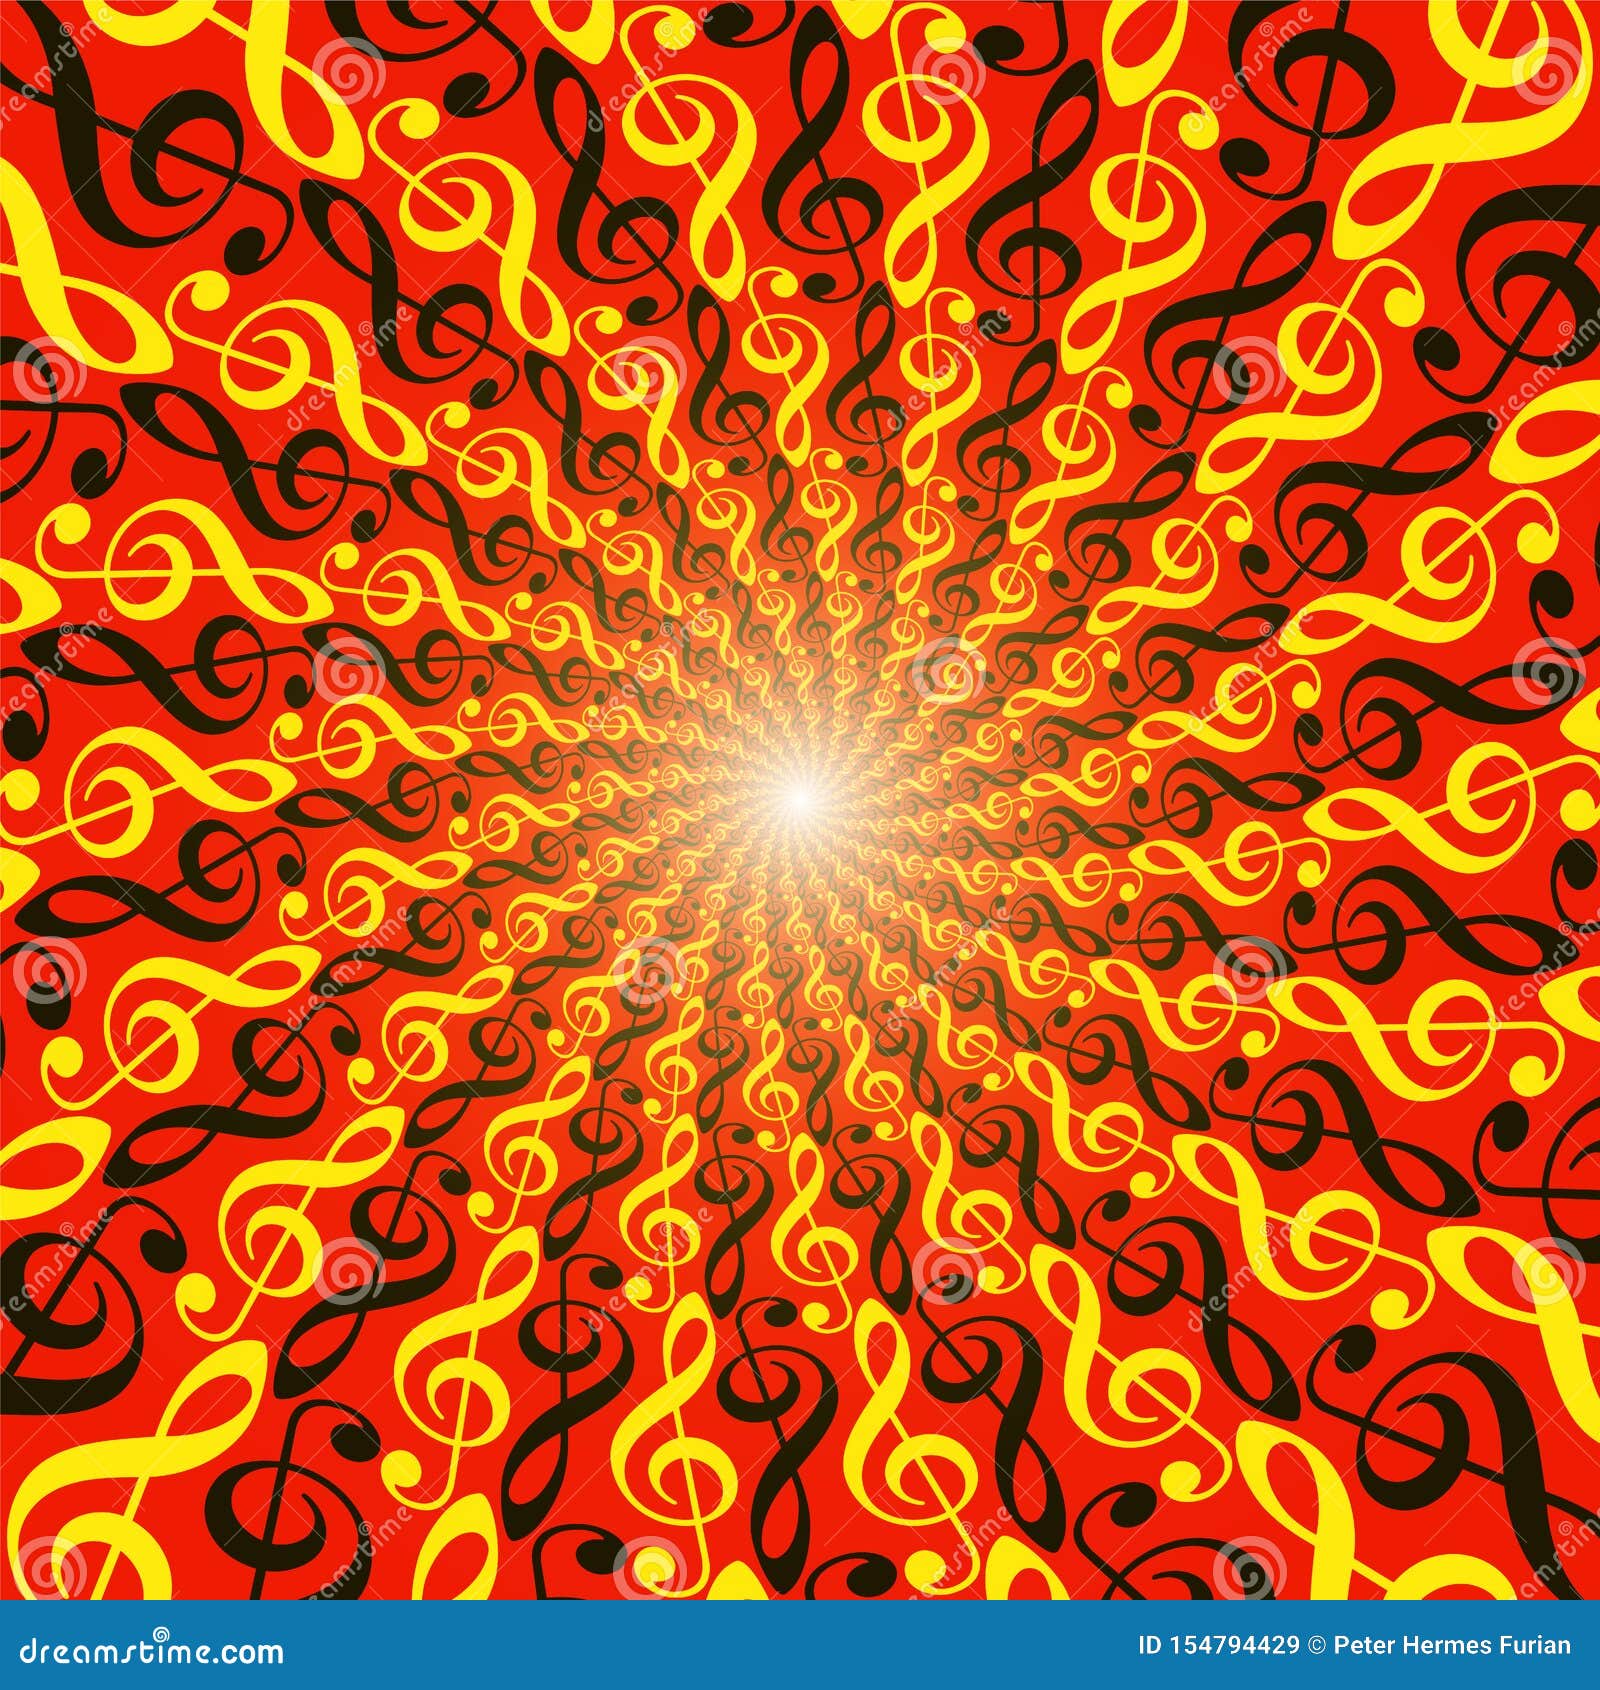 treble clefs explosion music spirale pattern red background